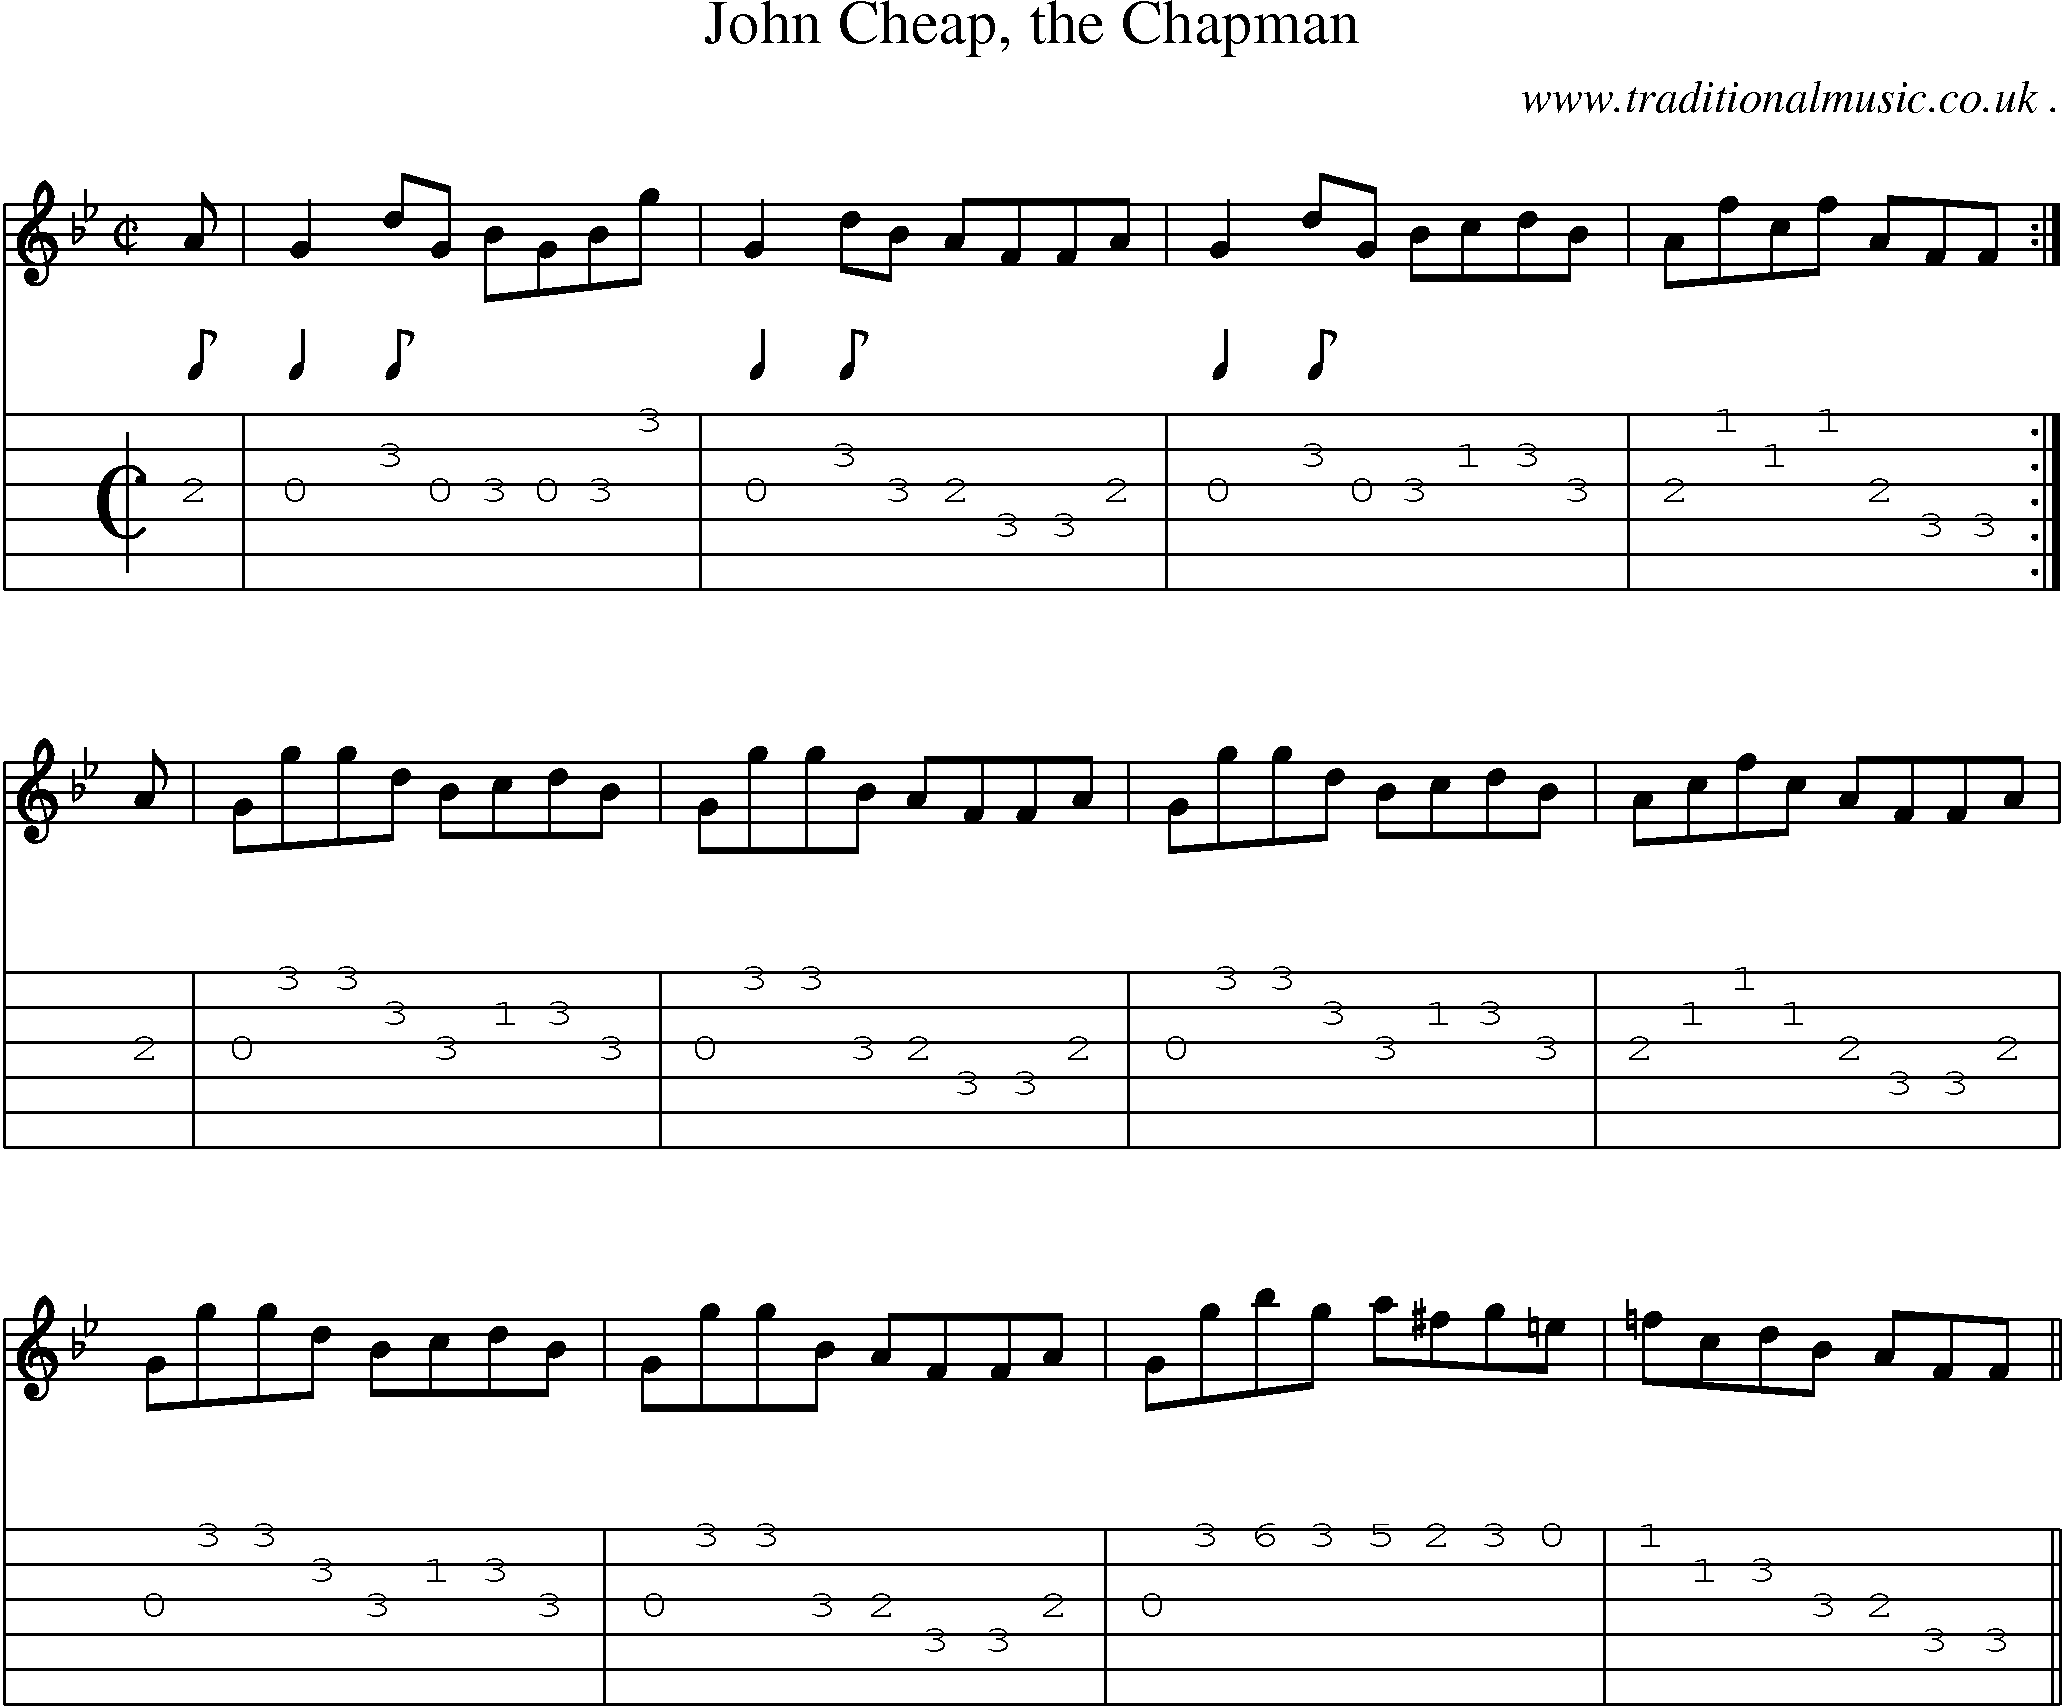 Sheet-music  score, Chords and Guitar Tabs for John Cheap The Chapman